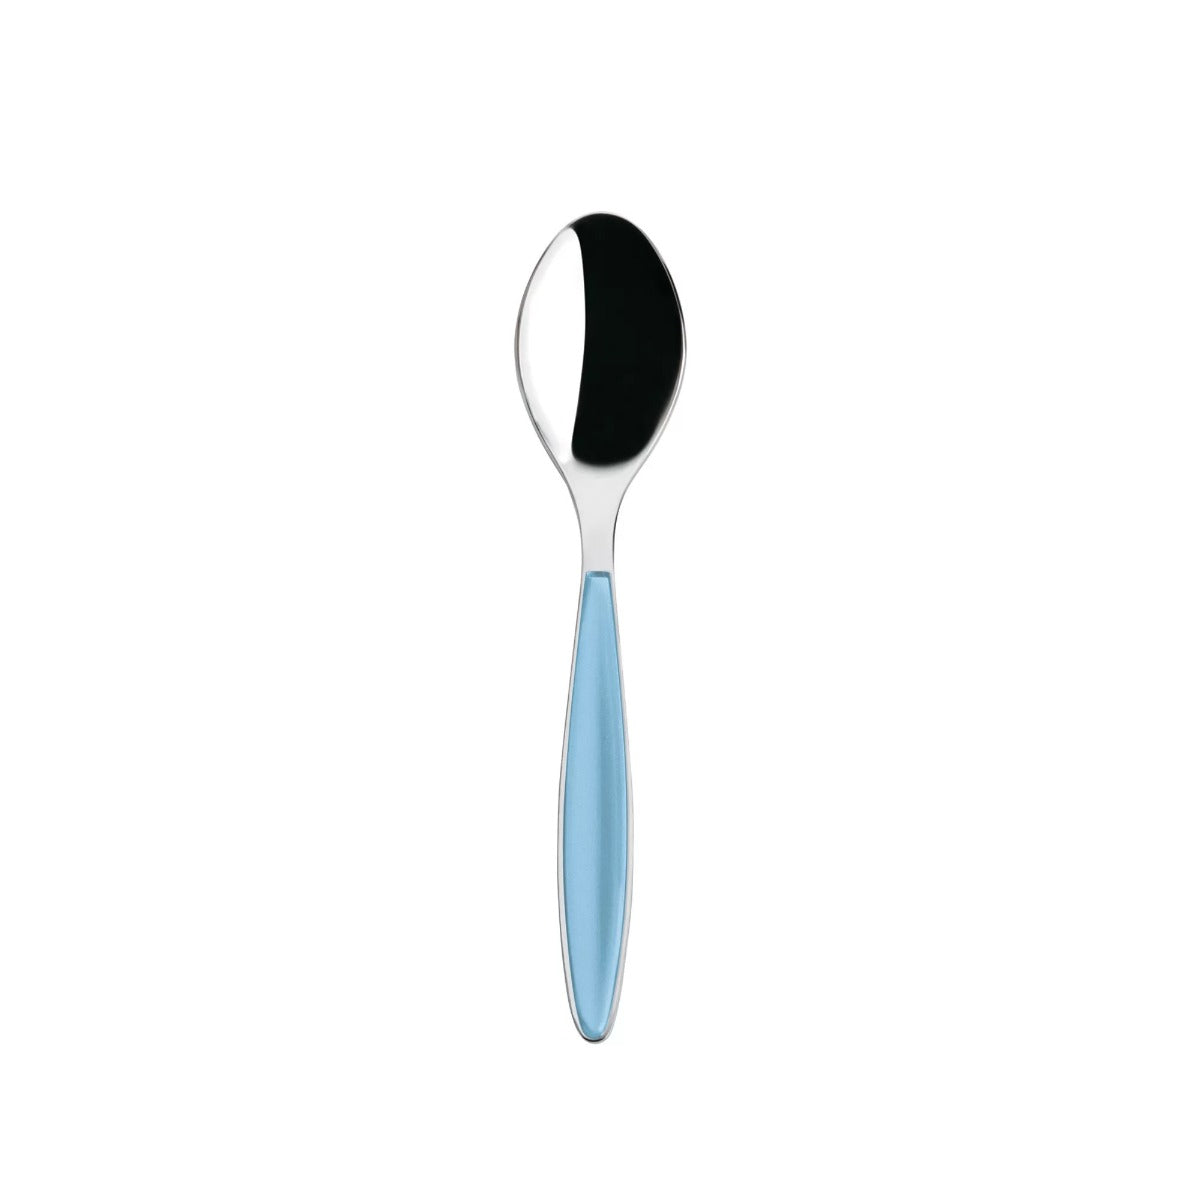 Guzzini teaspoon, light blue